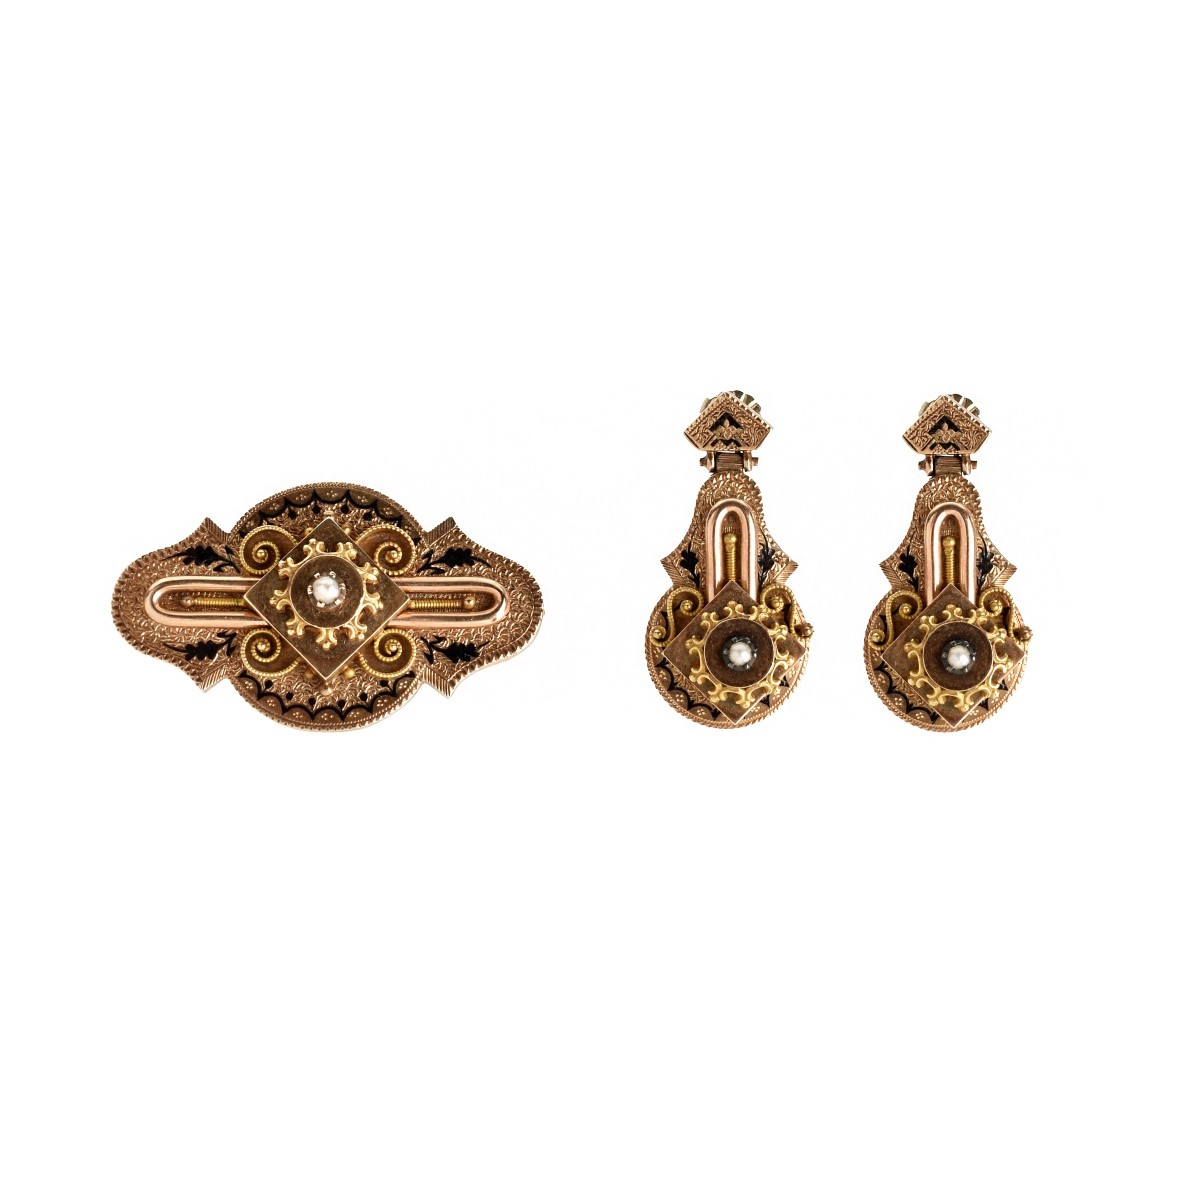 Victorian 14K Brooch and Earrings